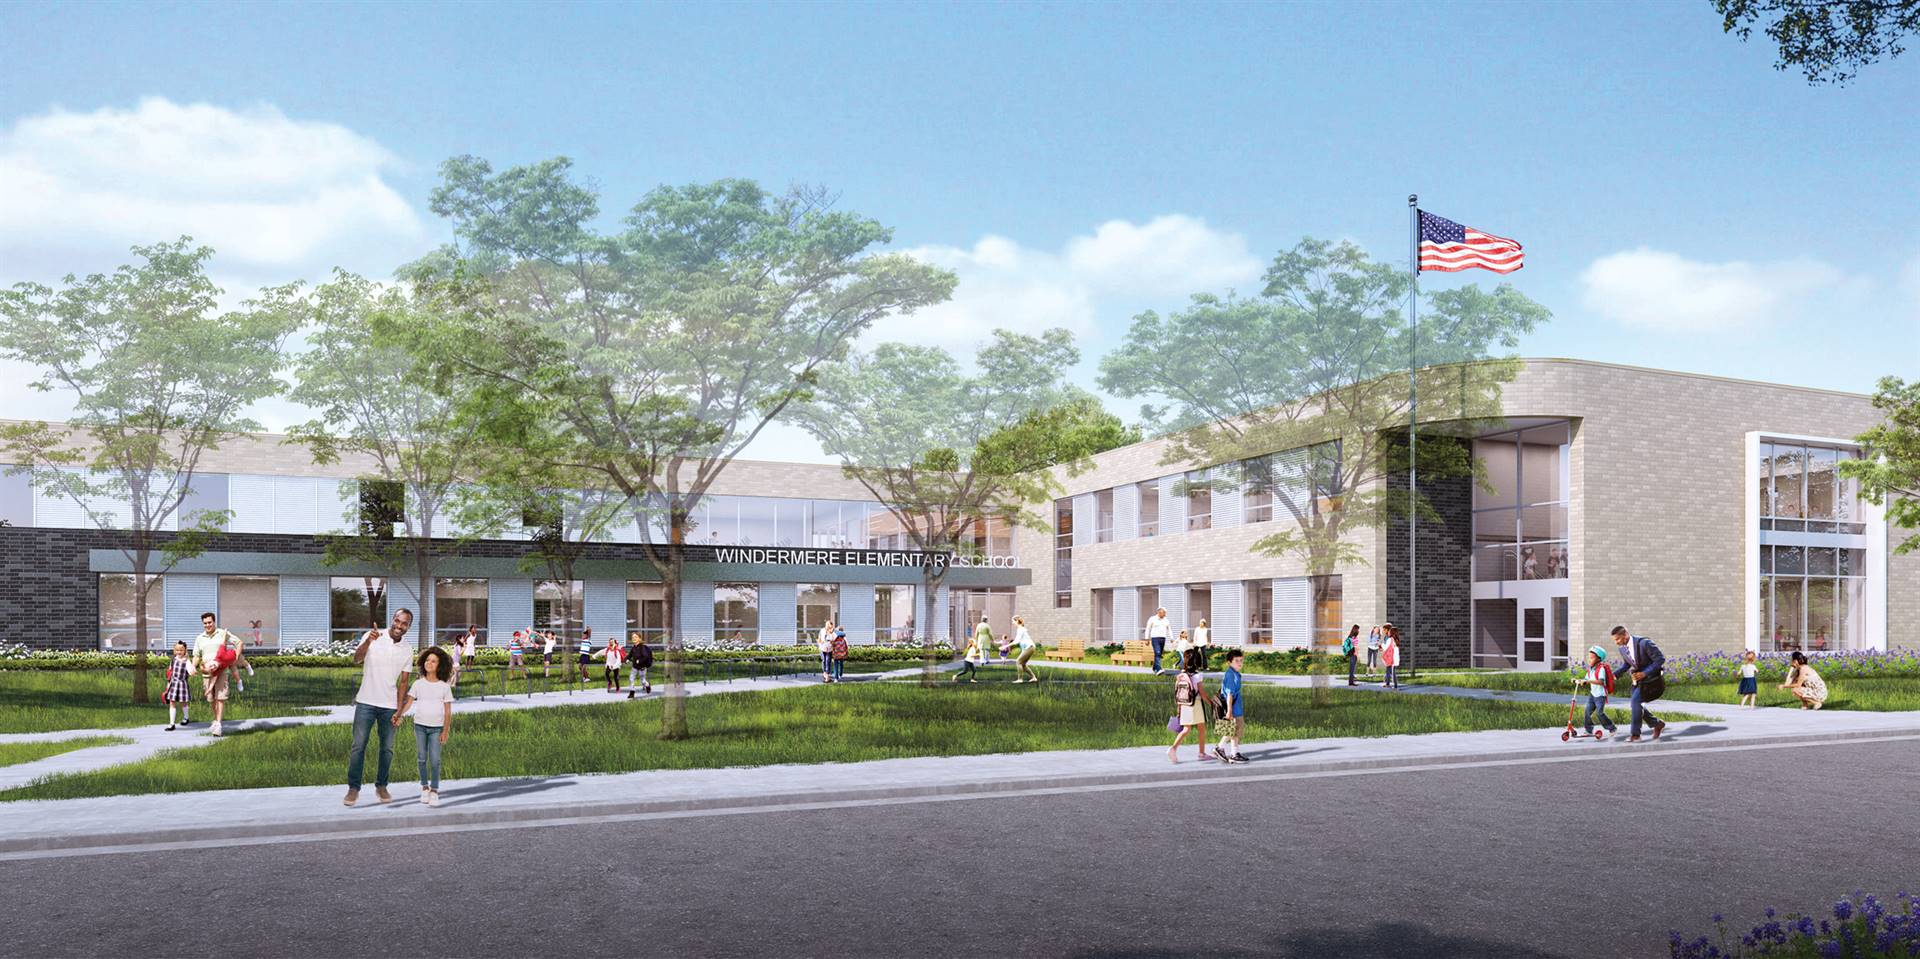 The new Windermere Elementary School